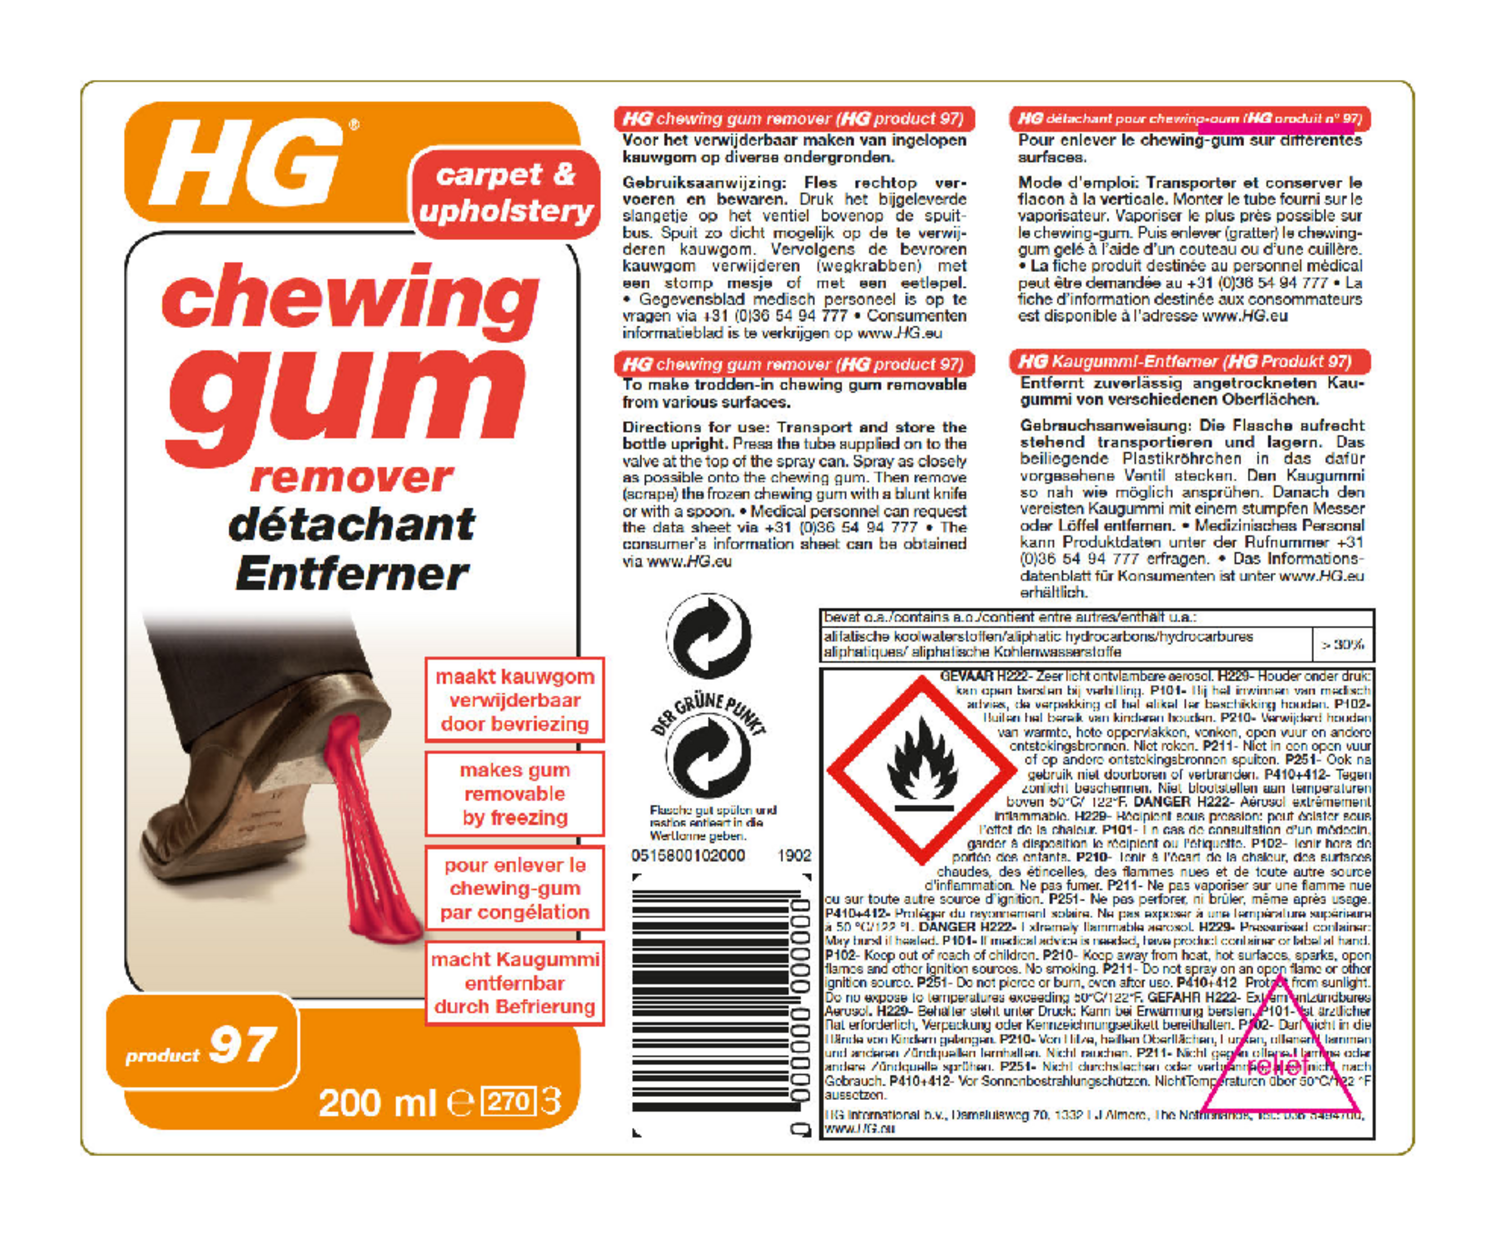 Chewing Gum Remover Productnr. 97 afbeelding van document #1, etiket